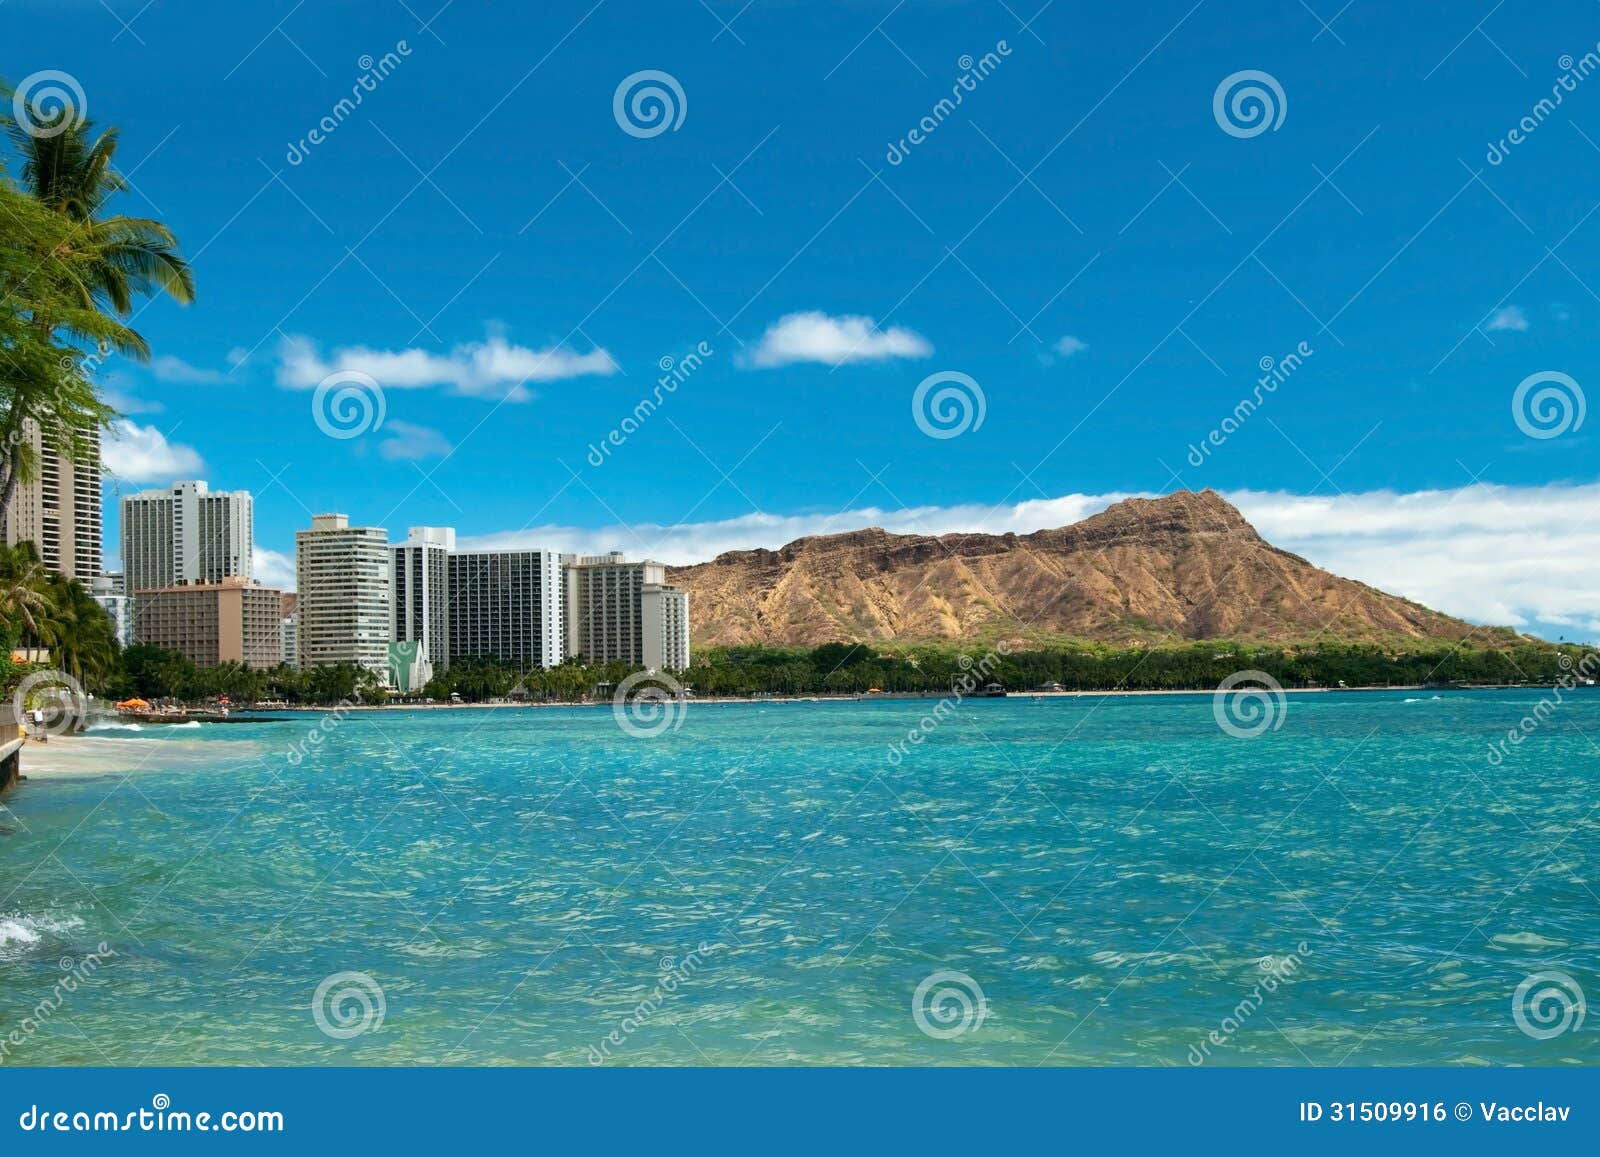 waikiki beach with azure water in hawaii with diamond head